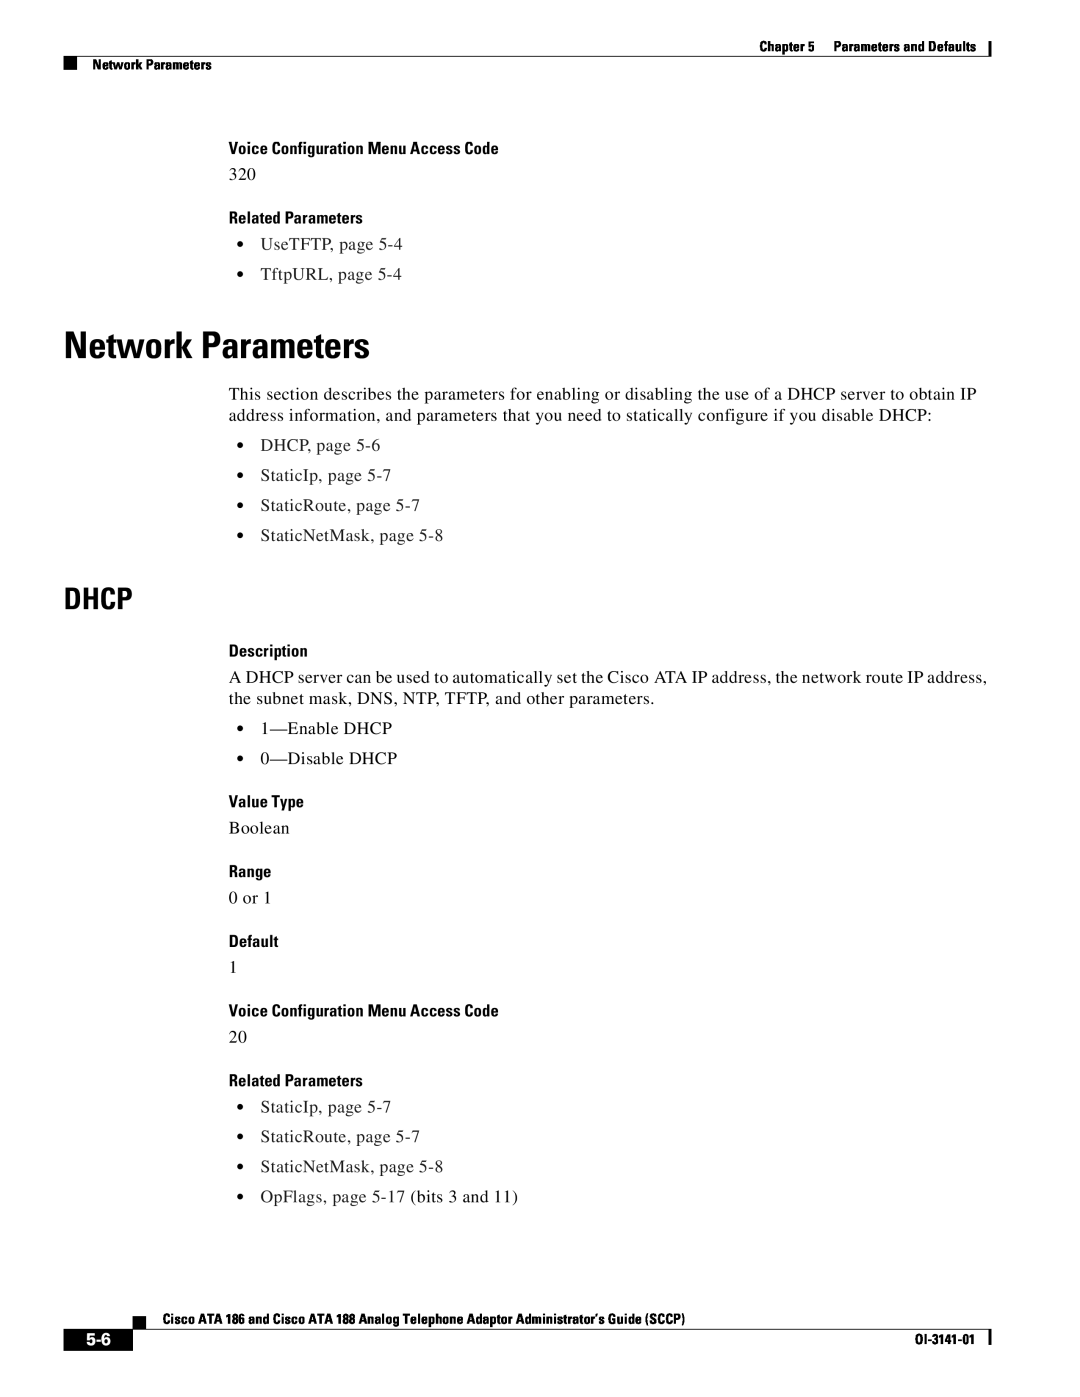 Cisco Systems ATA 186 Network Parameters, Dhcp, Voice Configuration Menu Access Code, Related Parameters, Description 